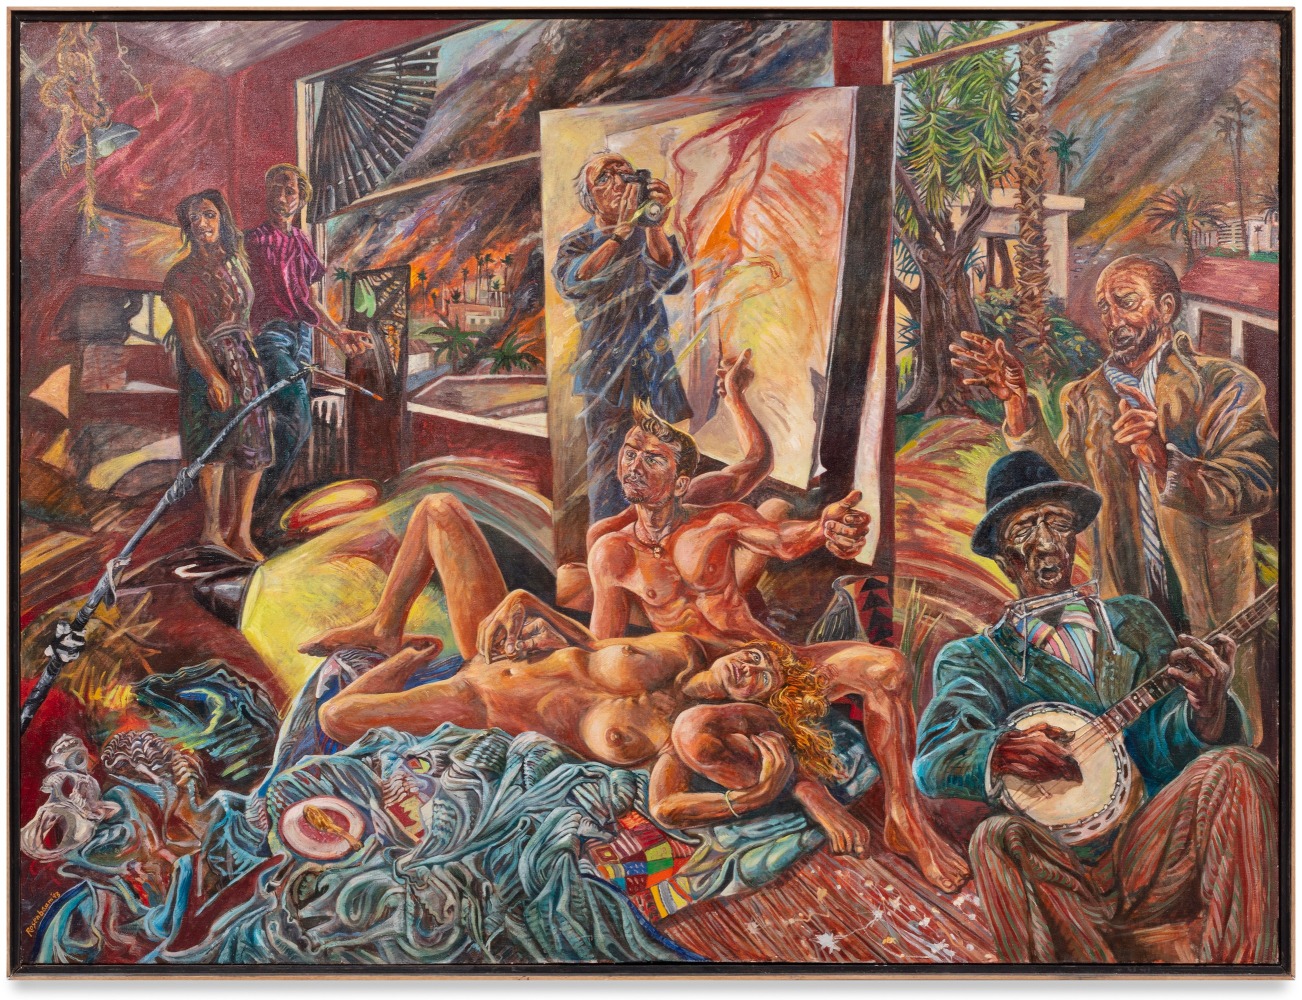 Art Rosenbaum, Painting Fire, 1993